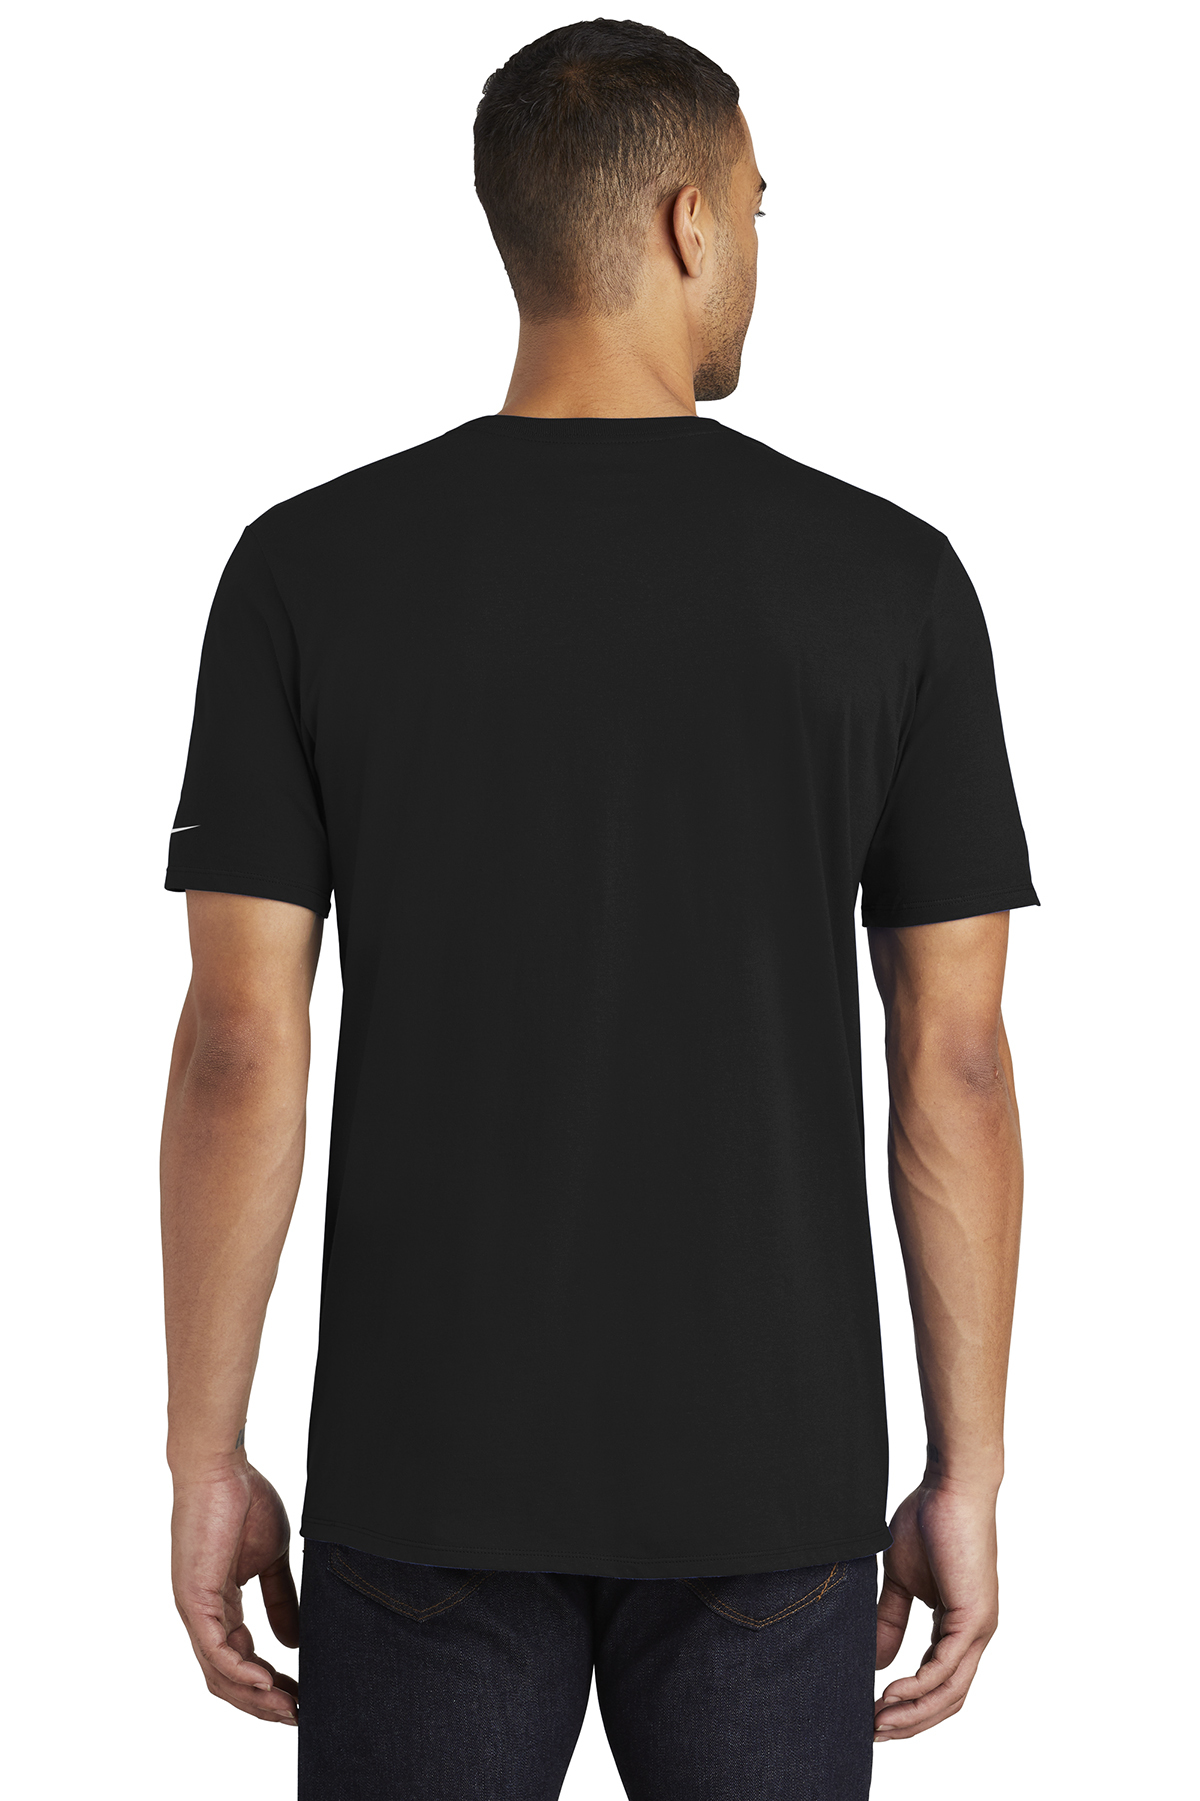 Nike - Authenticated T-Shirt - Cotton Black Plain for Men, Never Worn